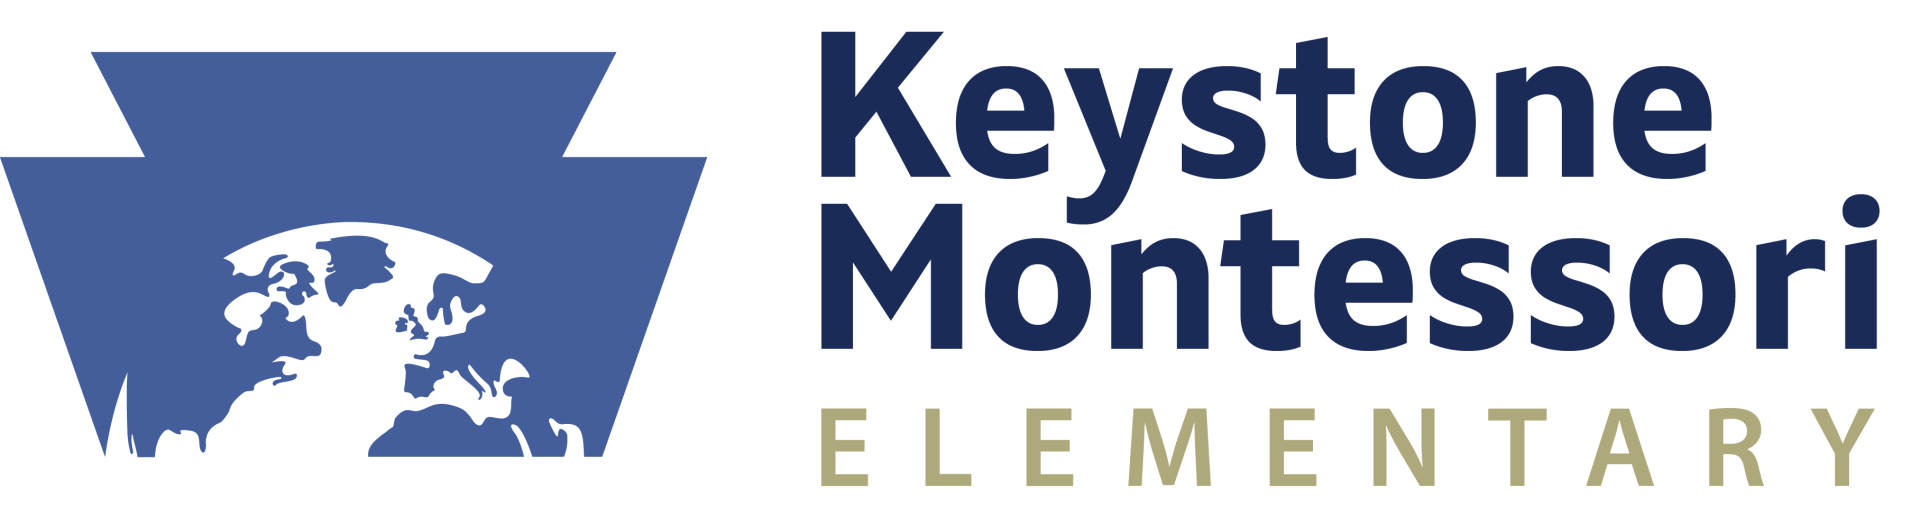 Keystone Montessori Elementary